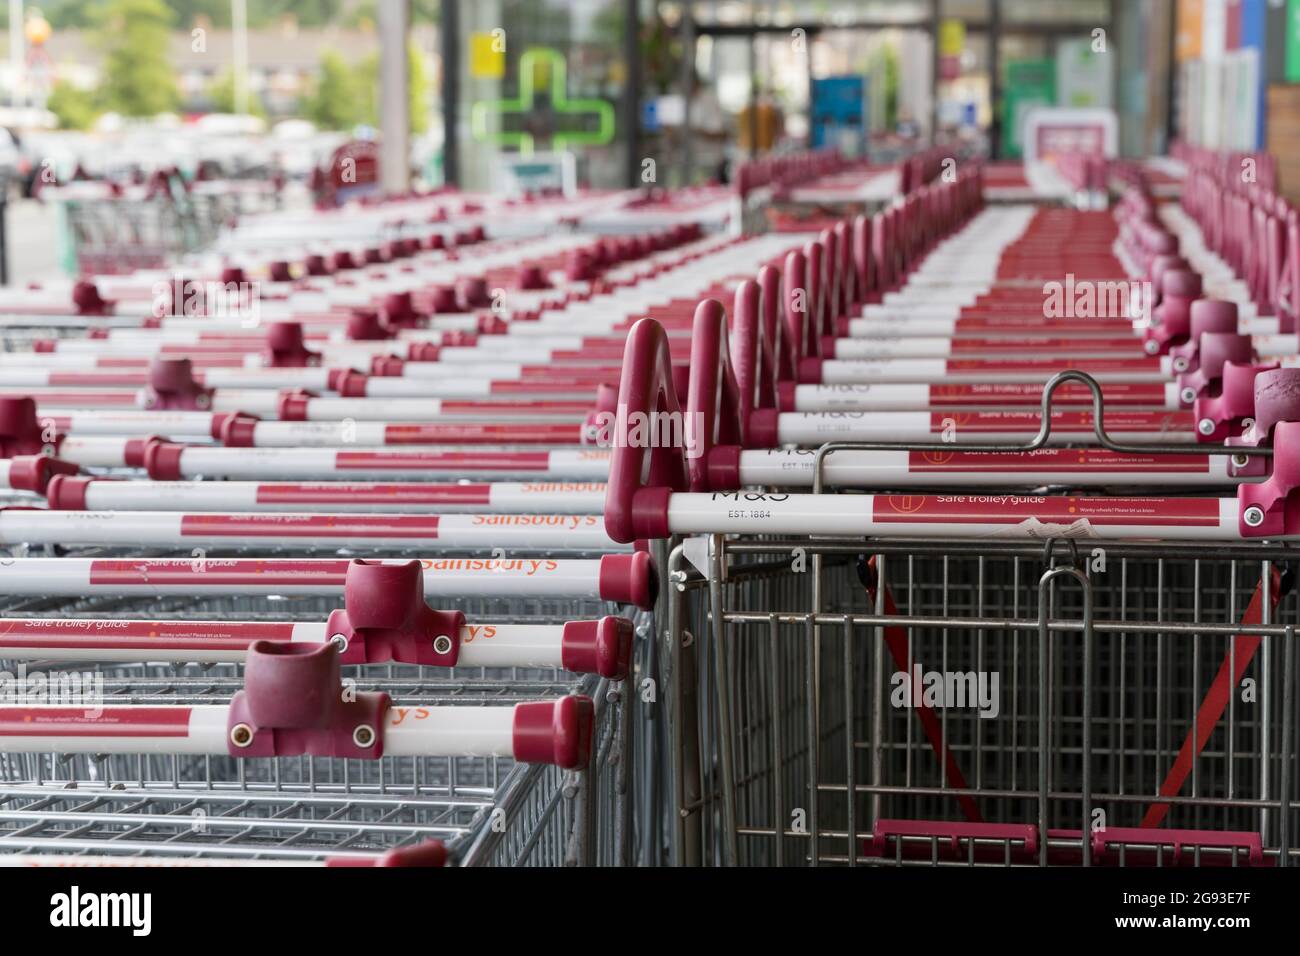 Supermarkt Trolleys Park, Mangel an Käufern wegen Lebensmittelknappheit liefert London England Europa Pingdemic Stockfoto